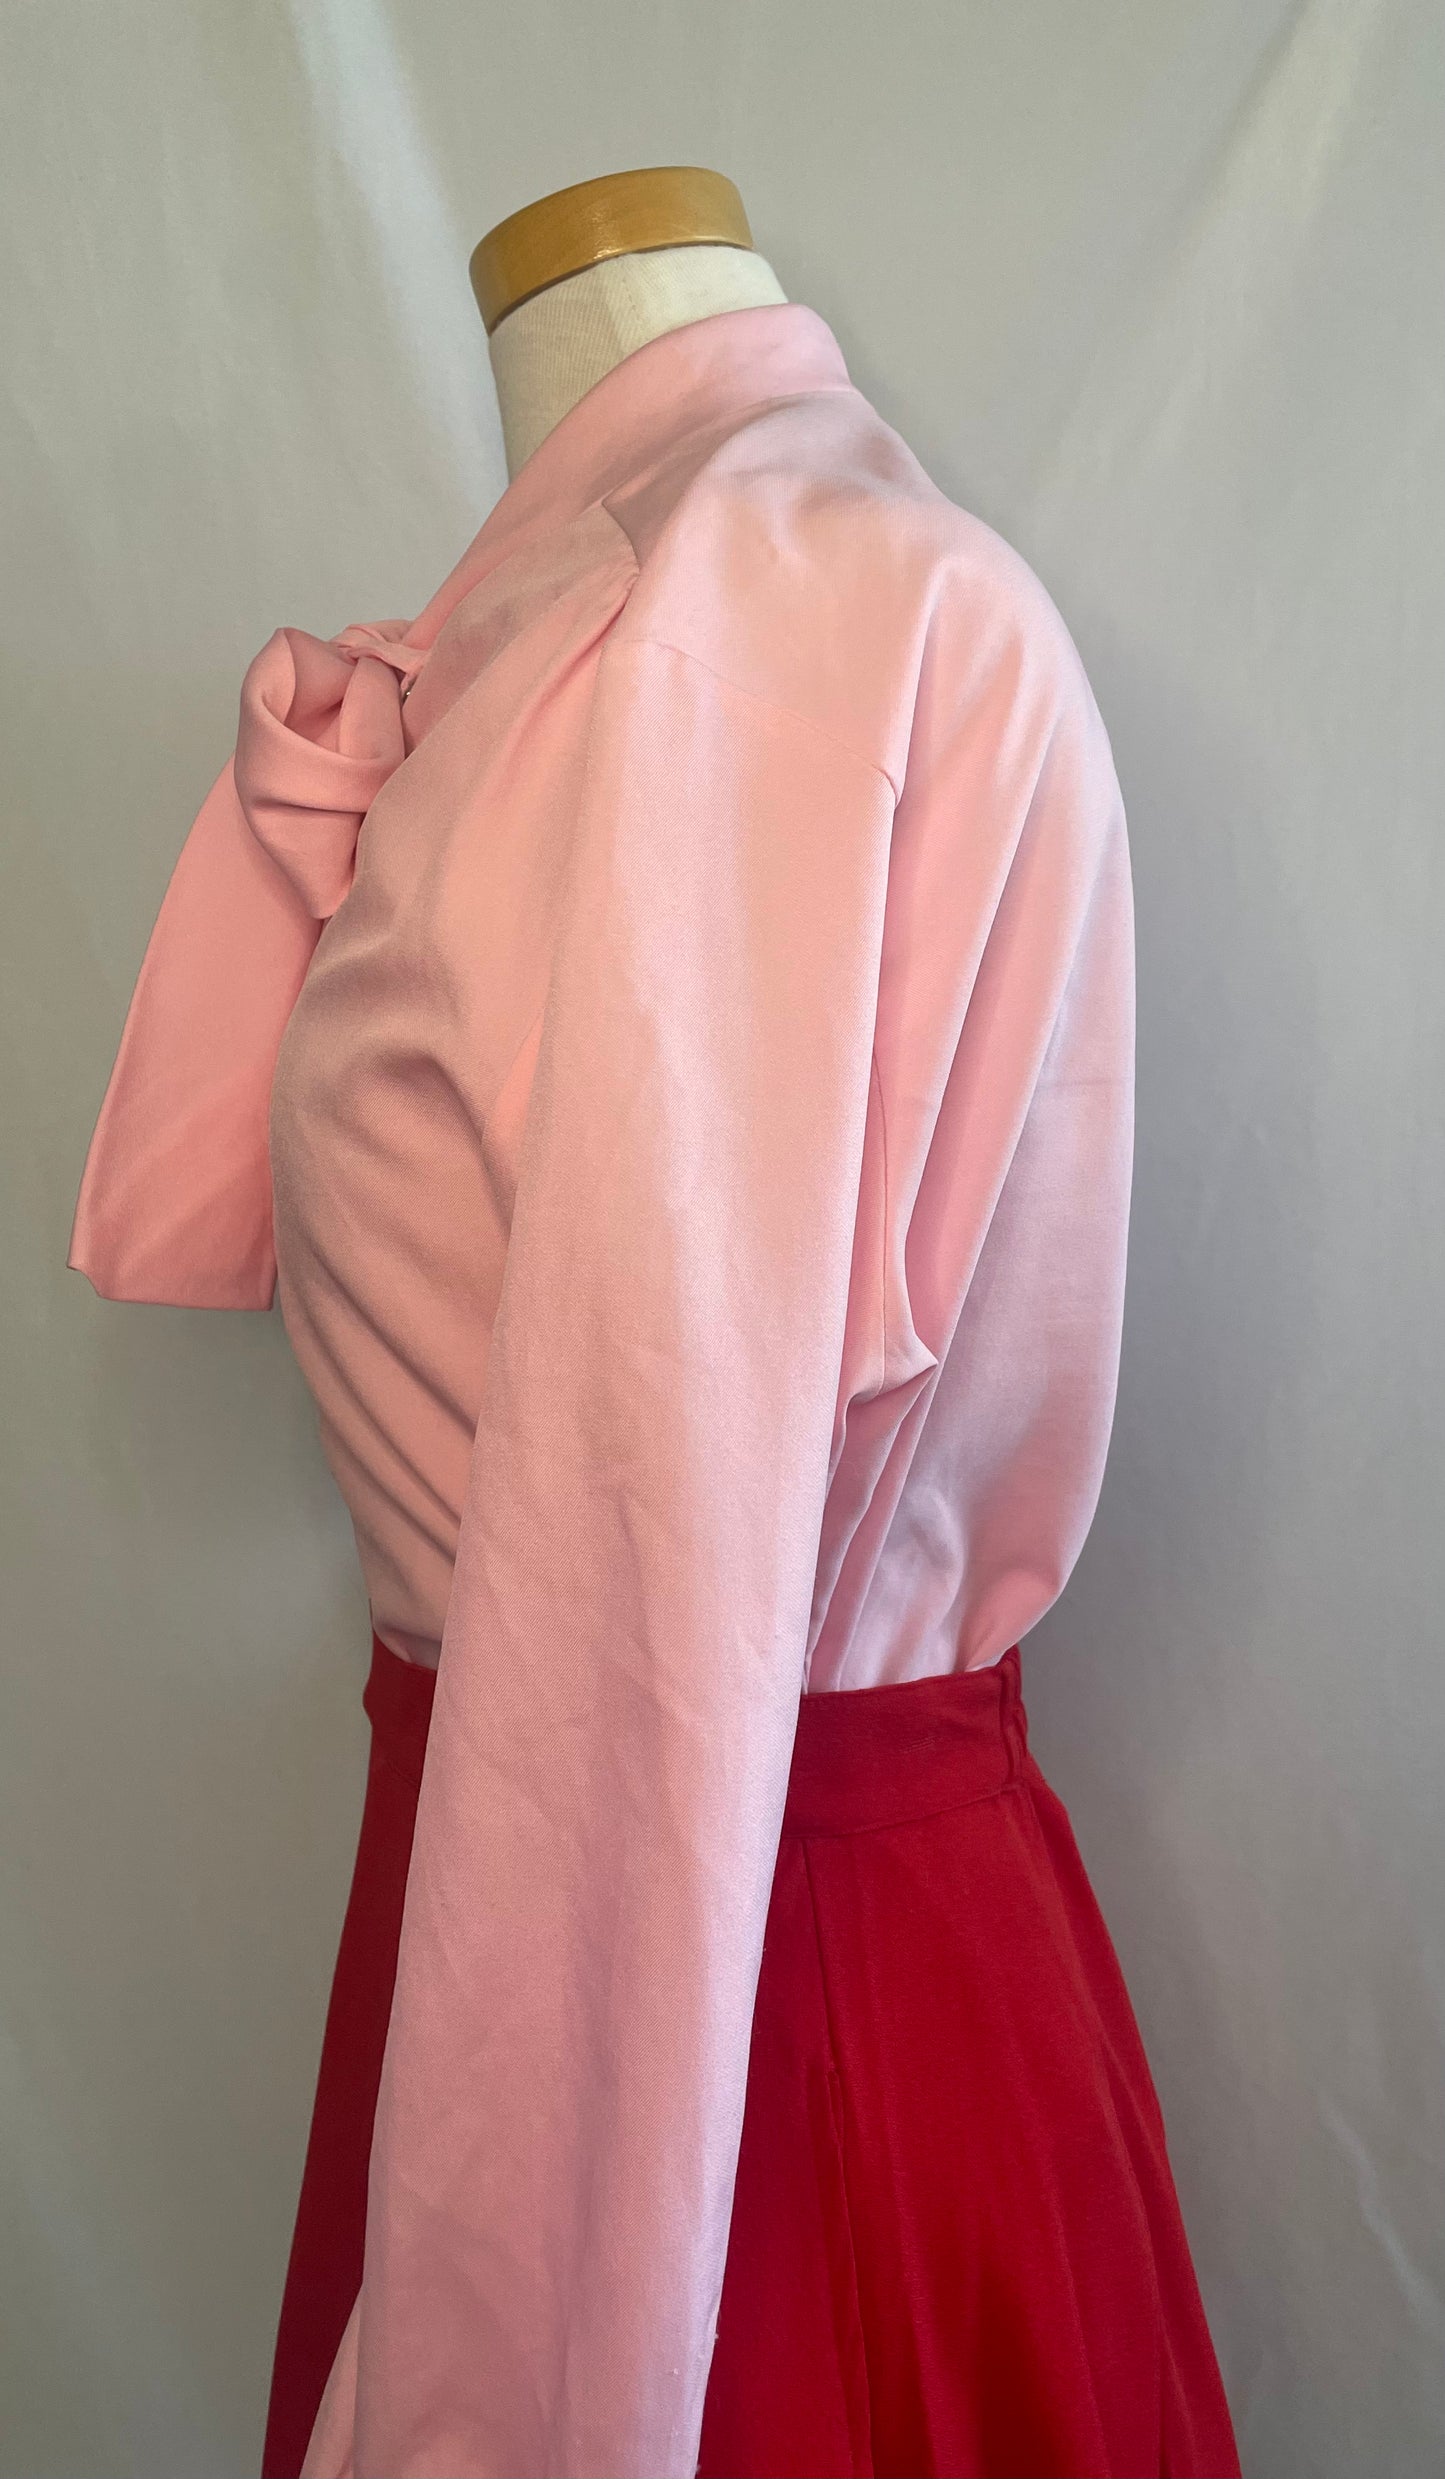 Vintage 1970s ILGWU Pink Bow Blouse